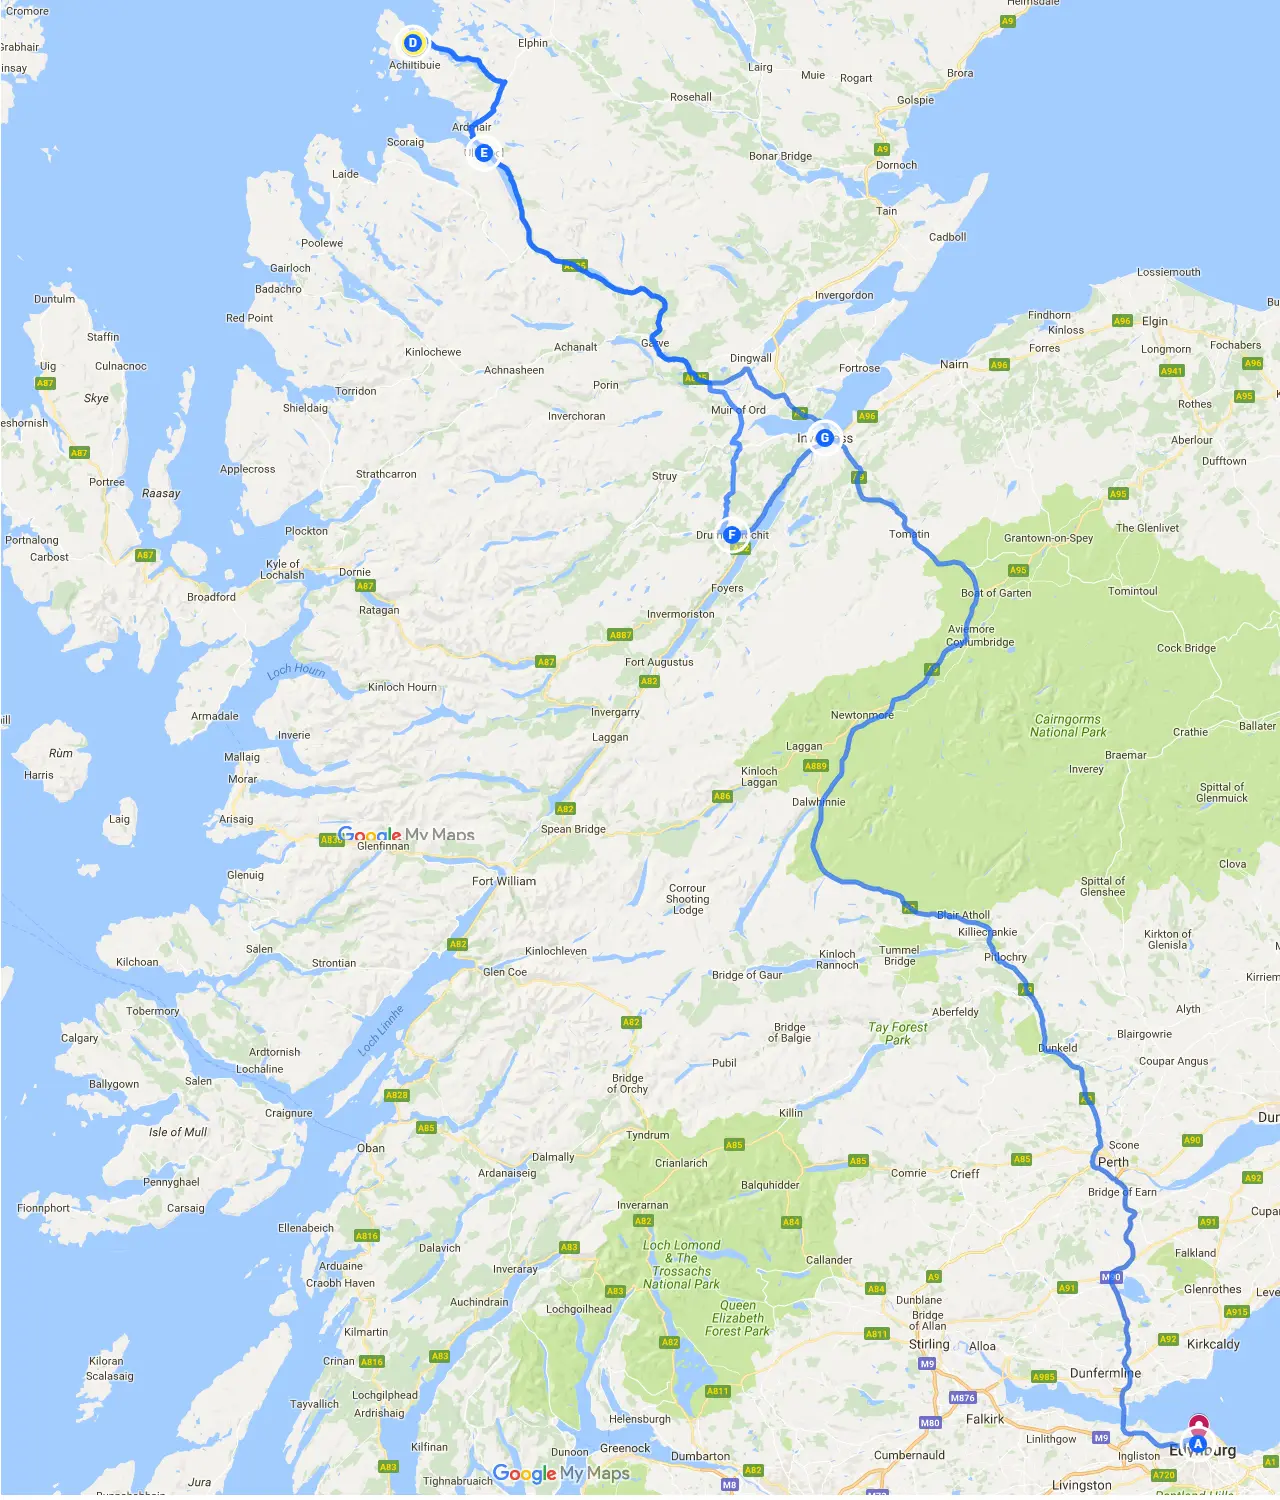 Scotland map solar eclipse 2015 trip